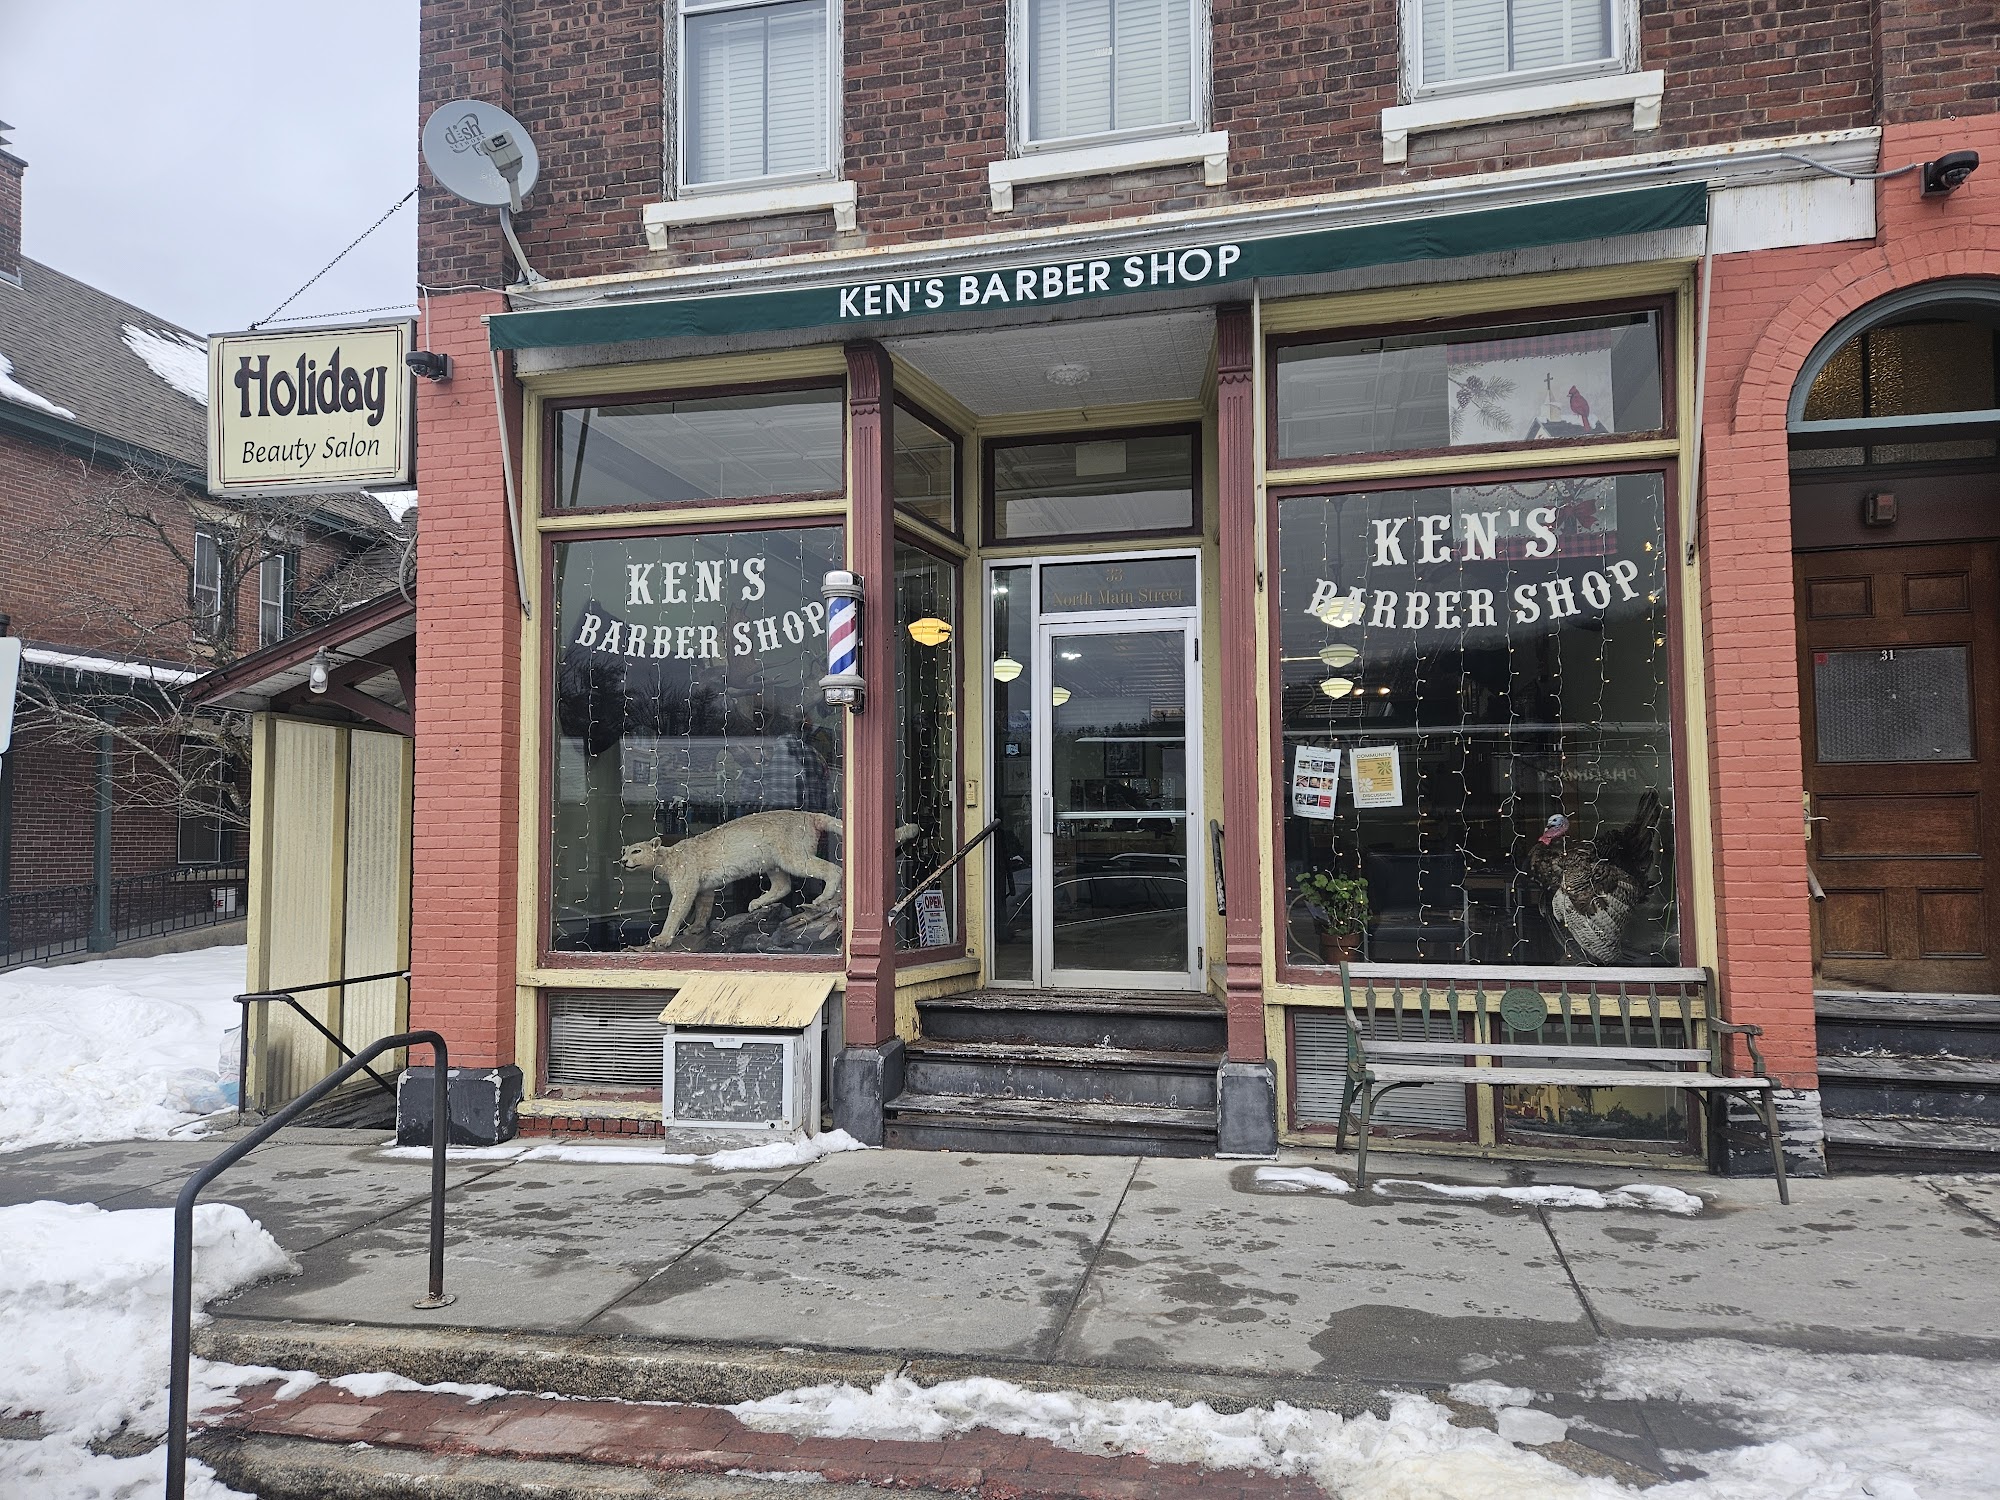 Ken's Barber Shop 33 N Main St, Randolph Vermont 05060